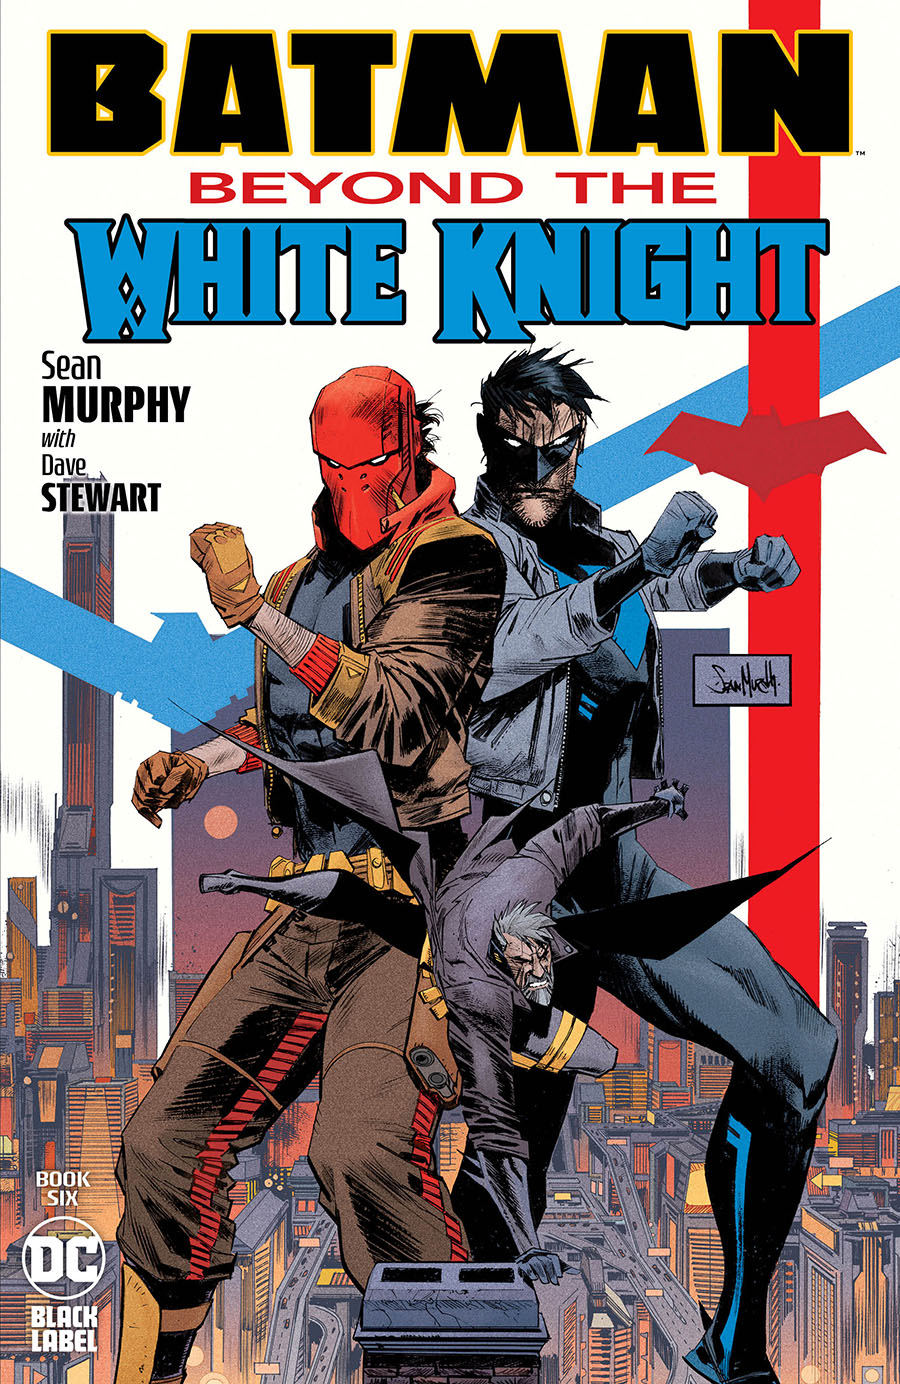 Batman Beyond The White Knight #6 Cover A Regular Sean Murphy Cover